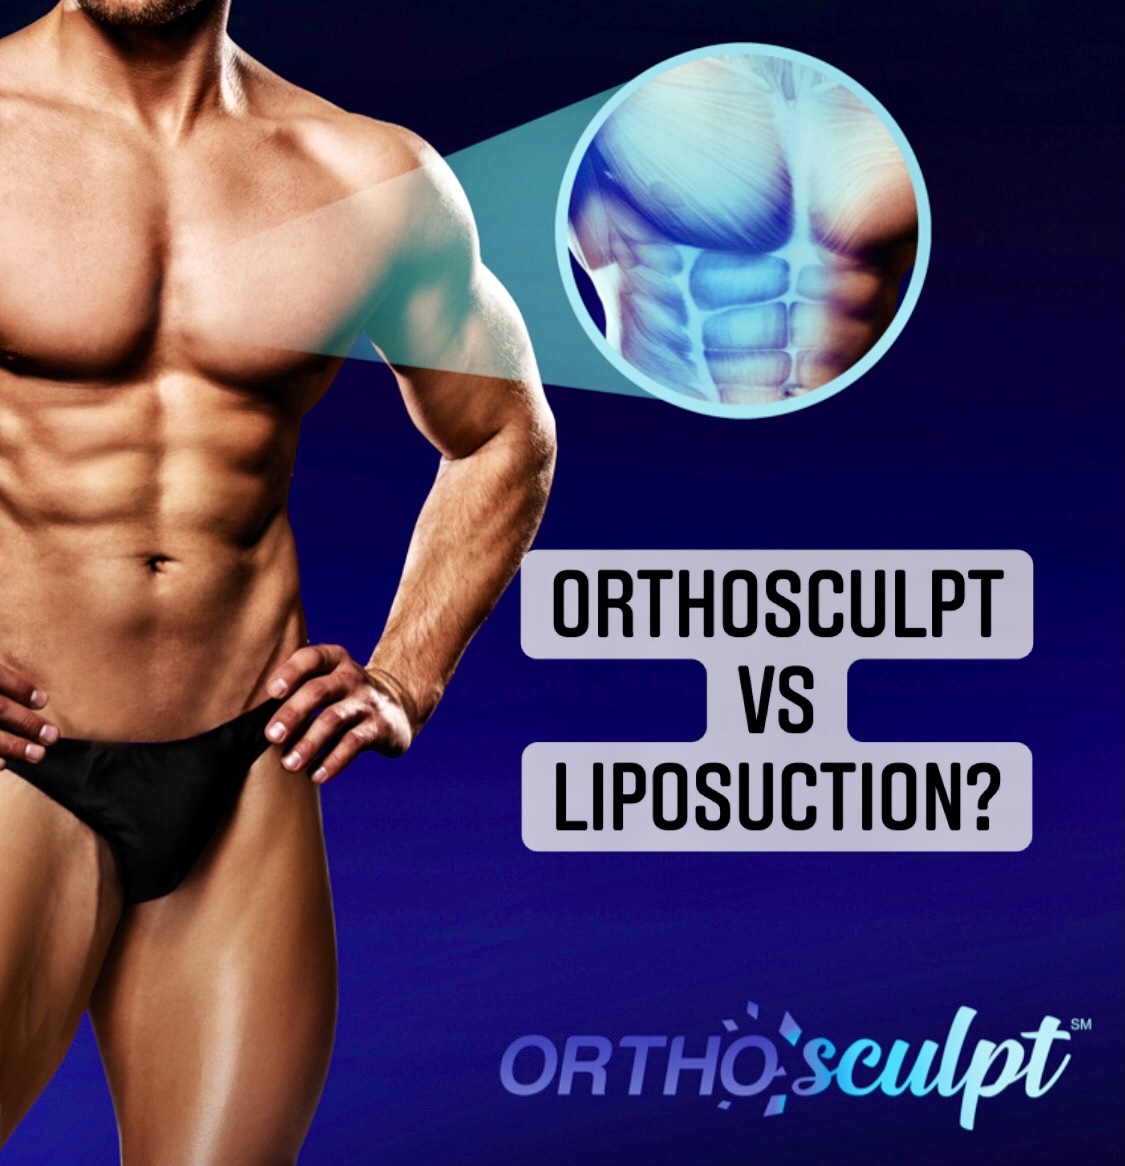 OrthoSculpt vs. Liposuction?